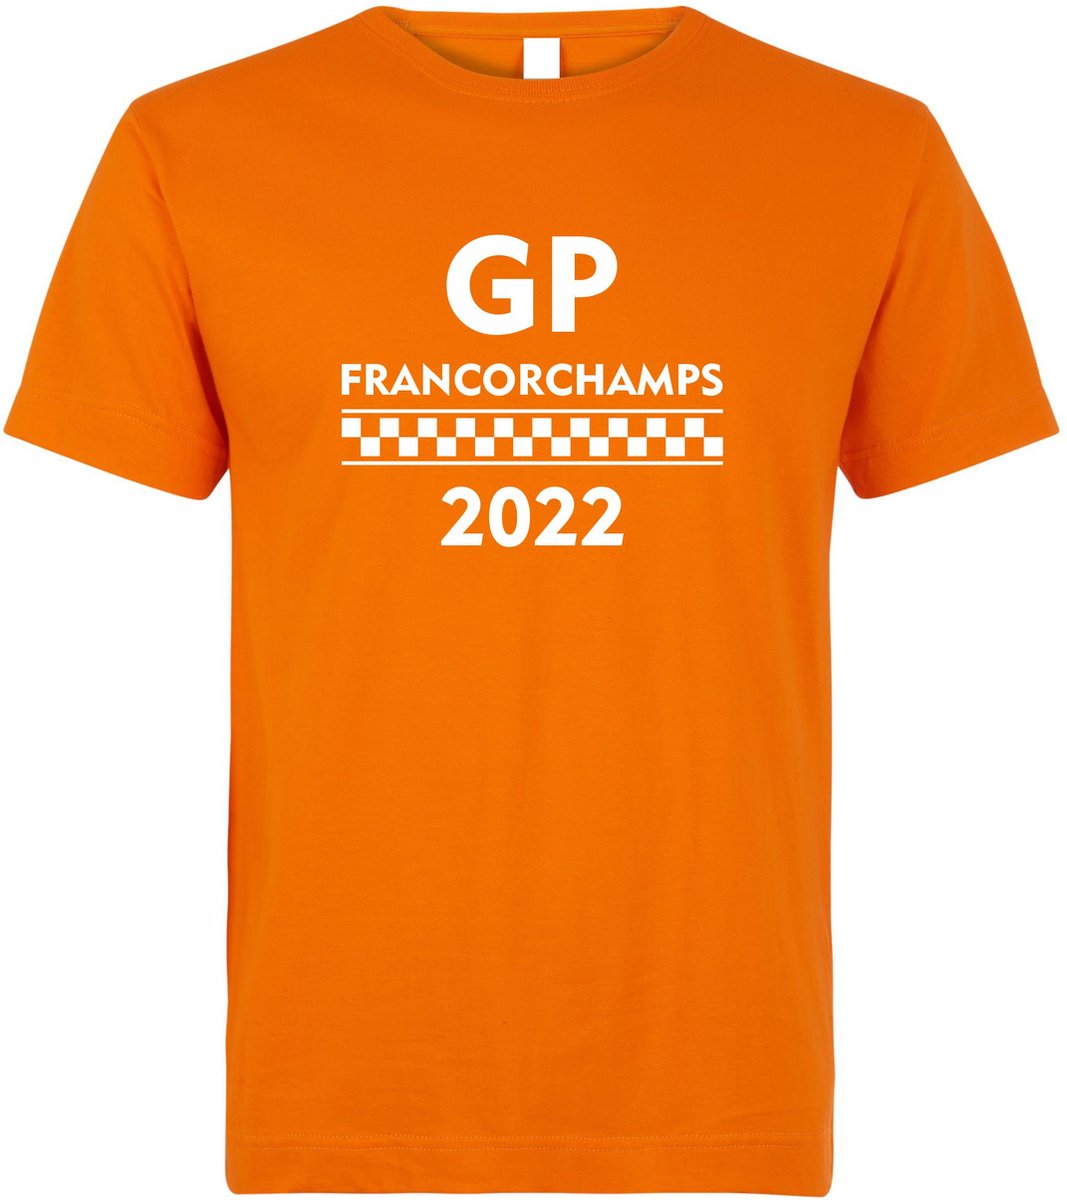 T-shirt kinderen GP Francorchamps 2022 | Max Verstappen / Red Bull Racing / Formule 1 fan | Grand Prix Circuit Spa-Francorchamps | kleding shirt | Oranje | maat 140